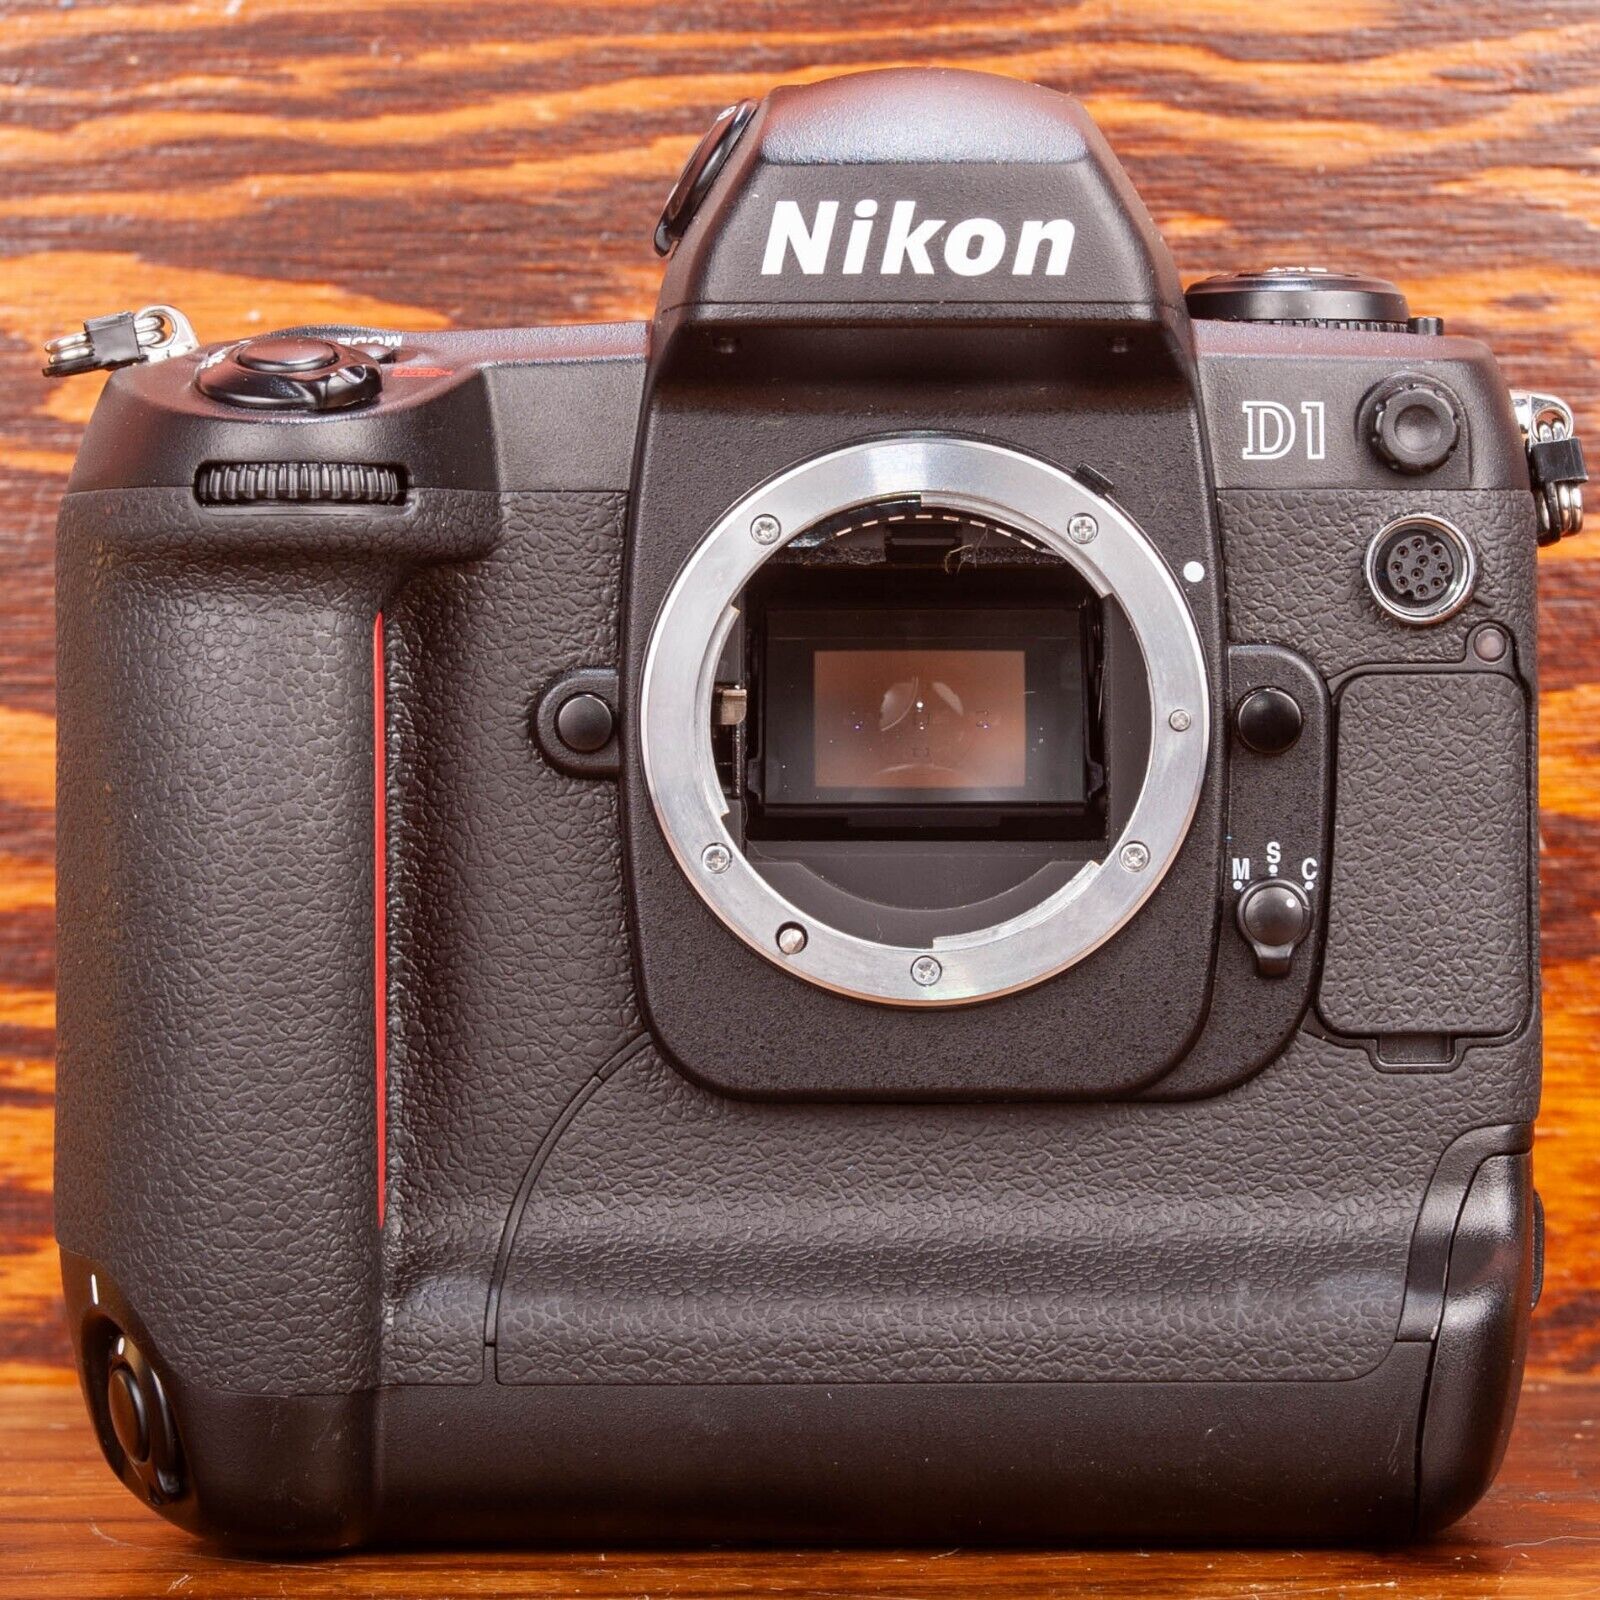 Nikon D1 2.7MP Retro Digital SLR Camera Body Only Tested Working